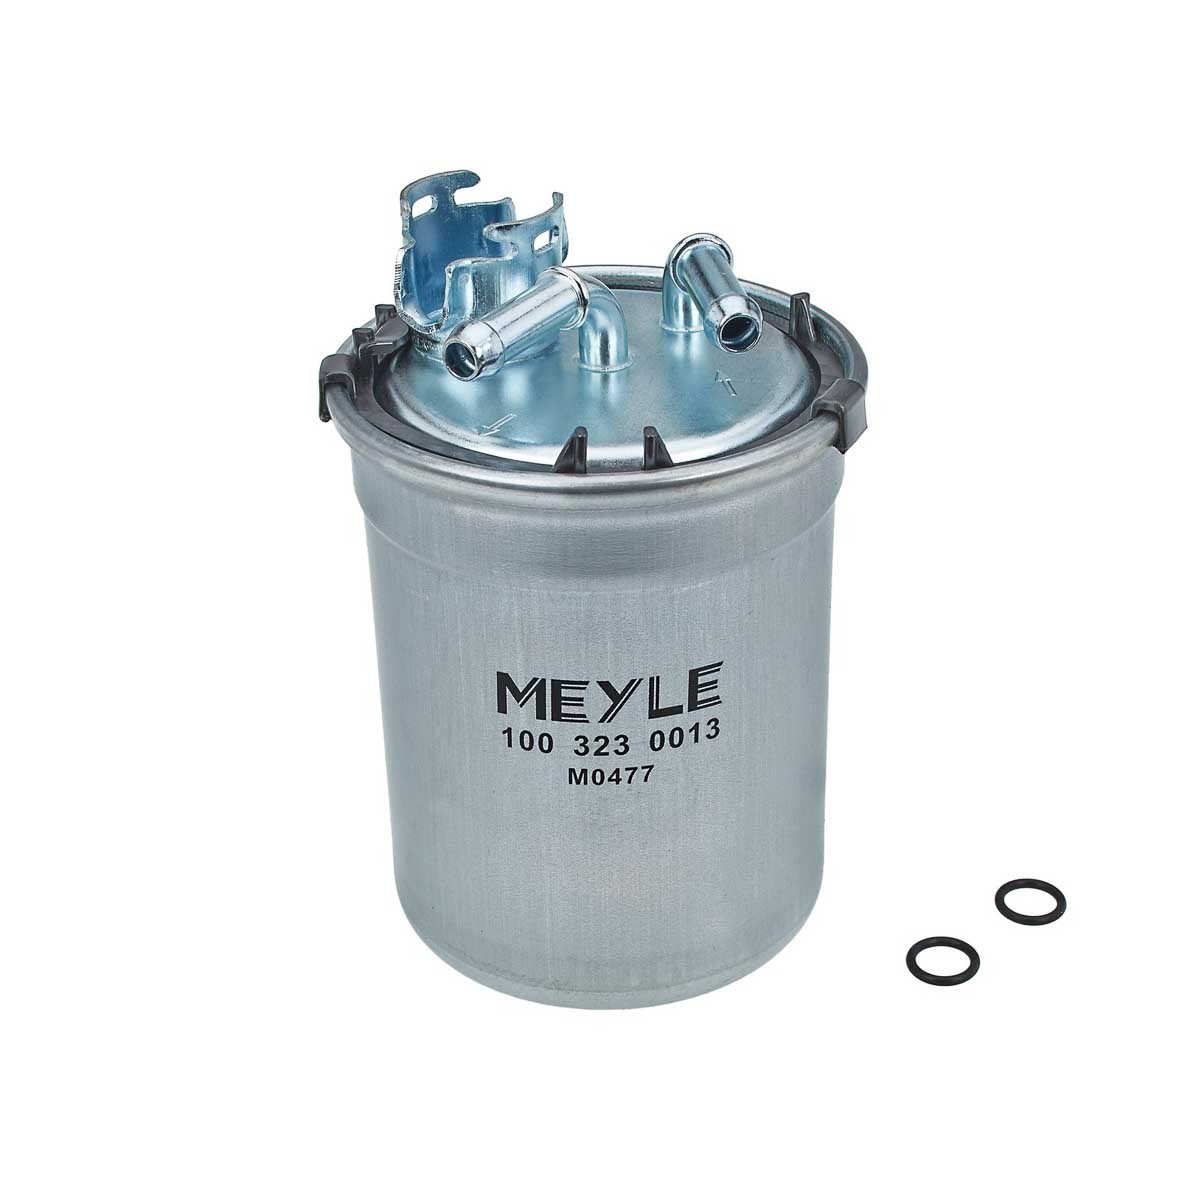 Original 100 323 0013 MEYLE Fuel filters SKODA